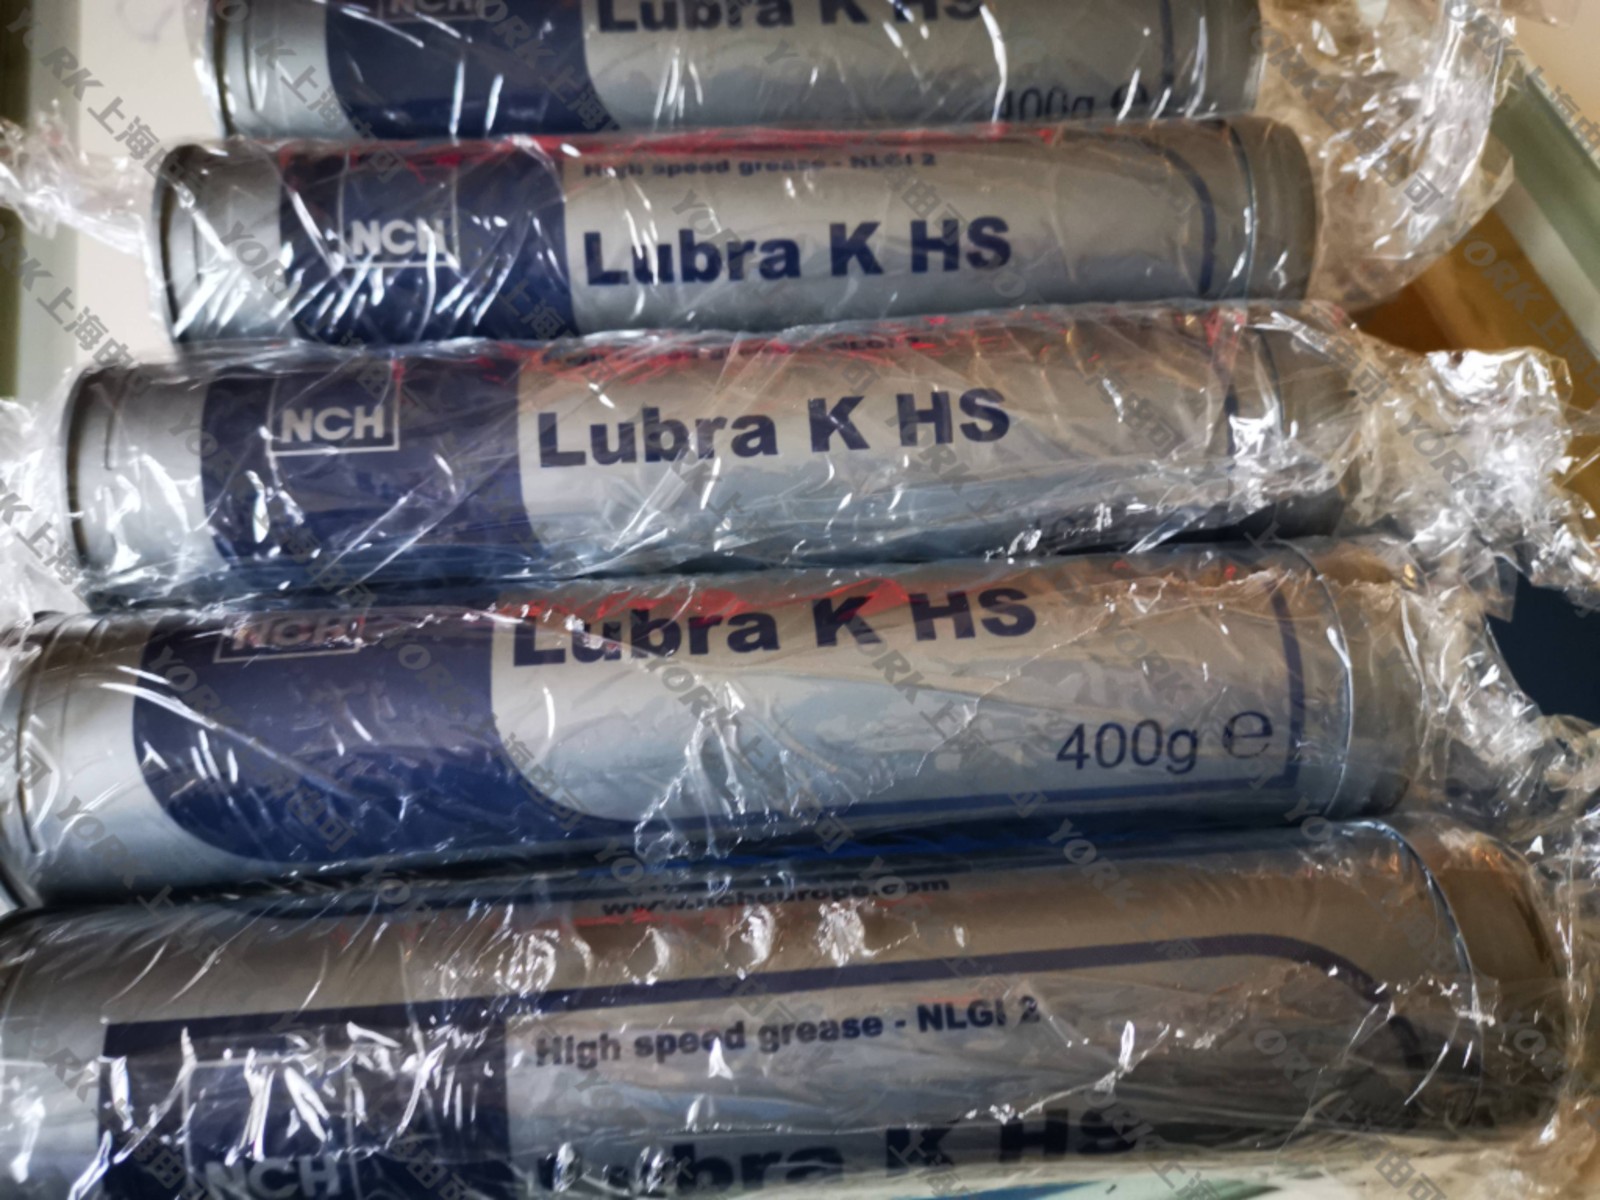 Kernite LUBRA K HS 有机钼高速润滑脂